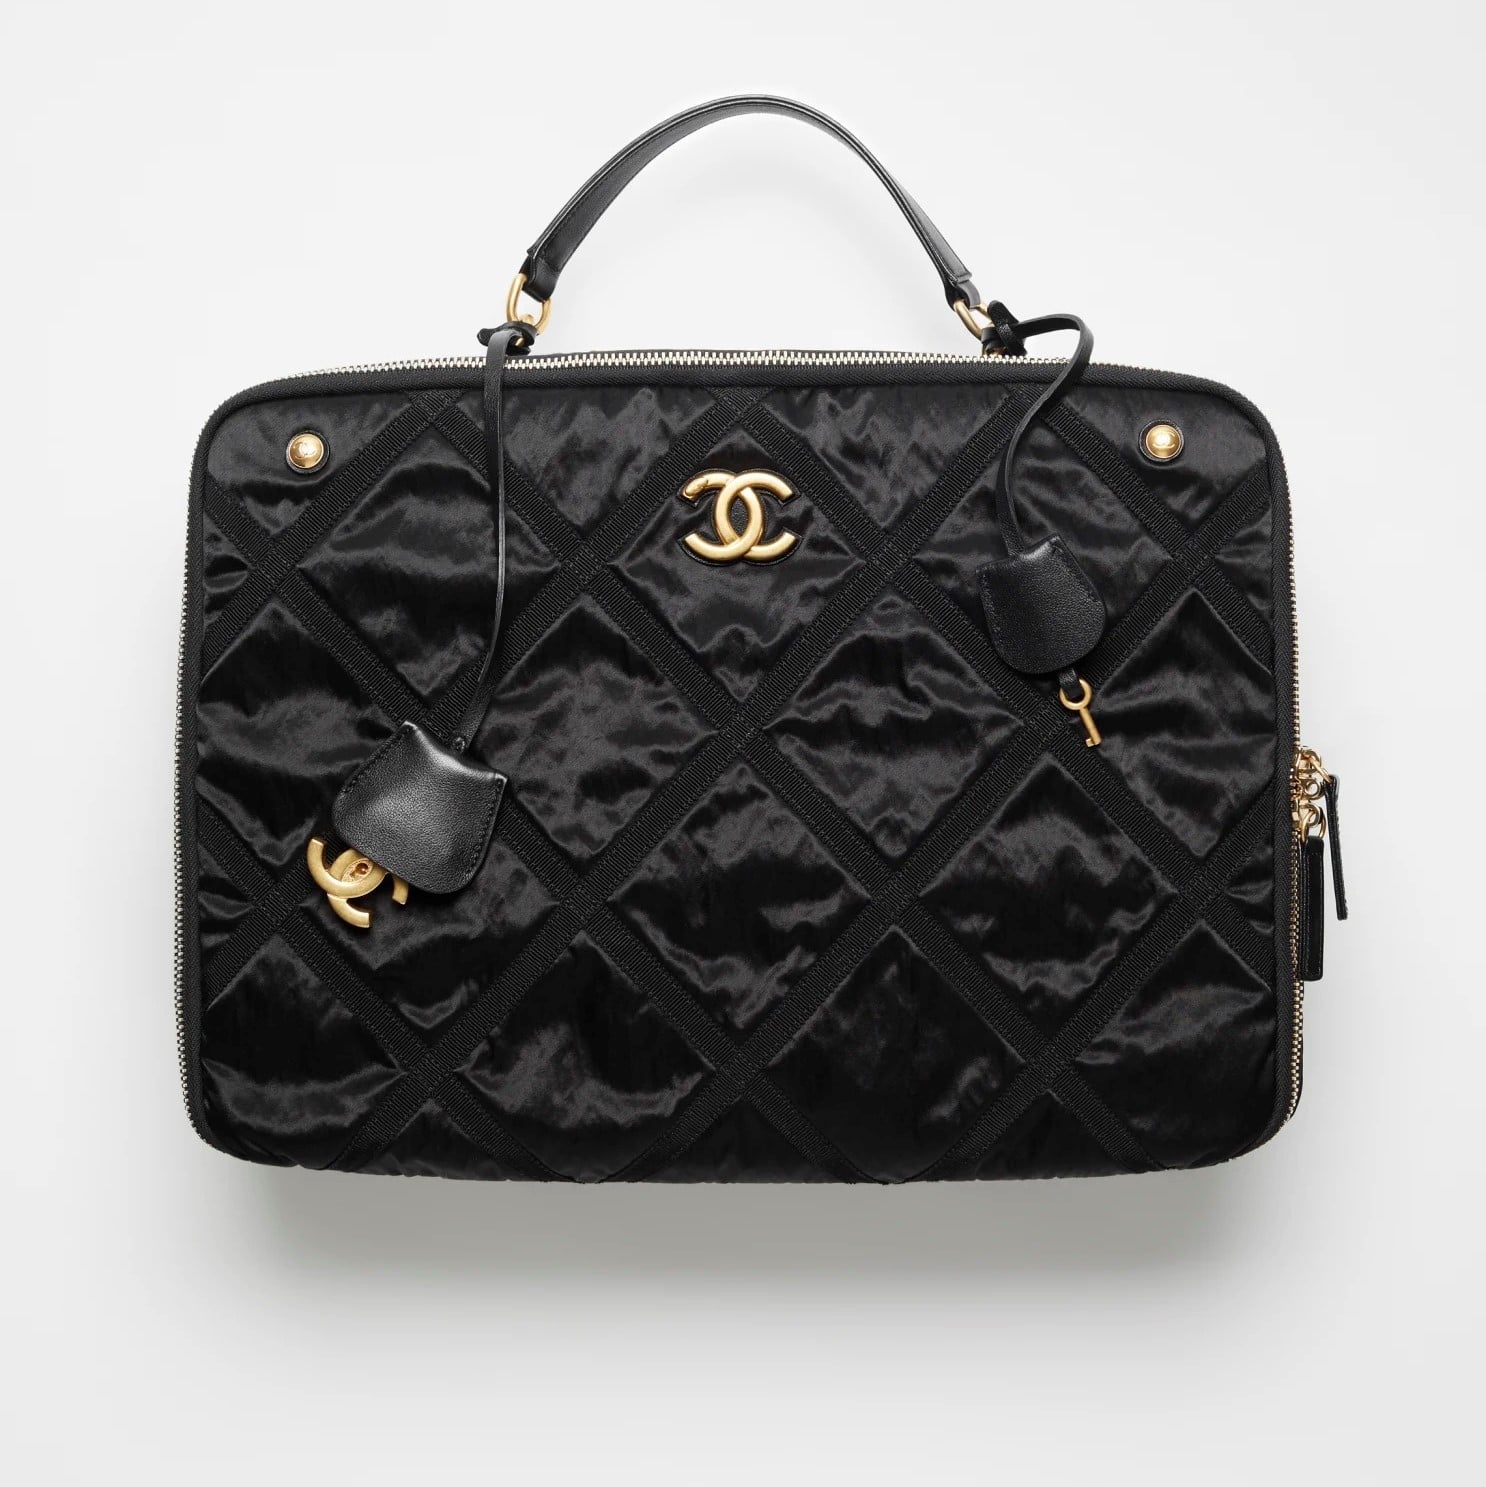 Chanel SpringSummer PreCollection 2023 Handbags are Here  PurseBop